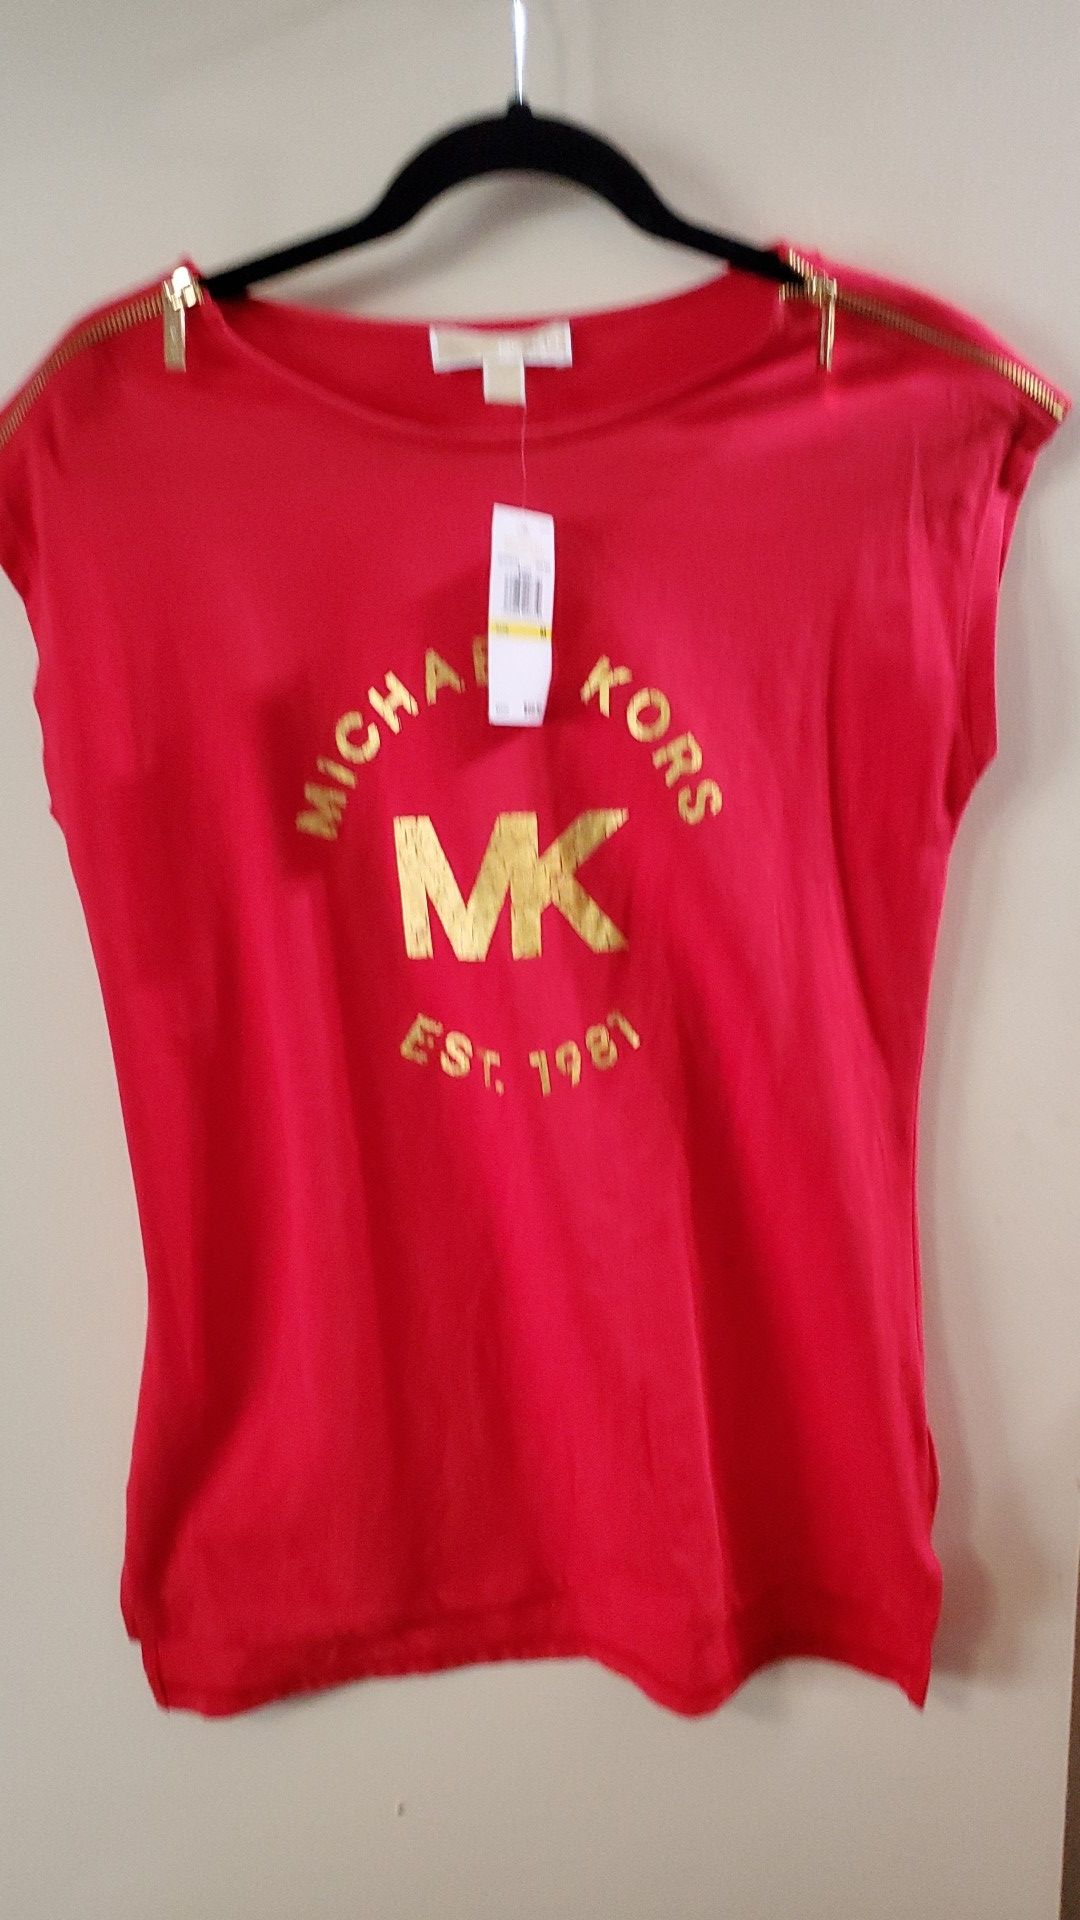 Michael Kors shirt